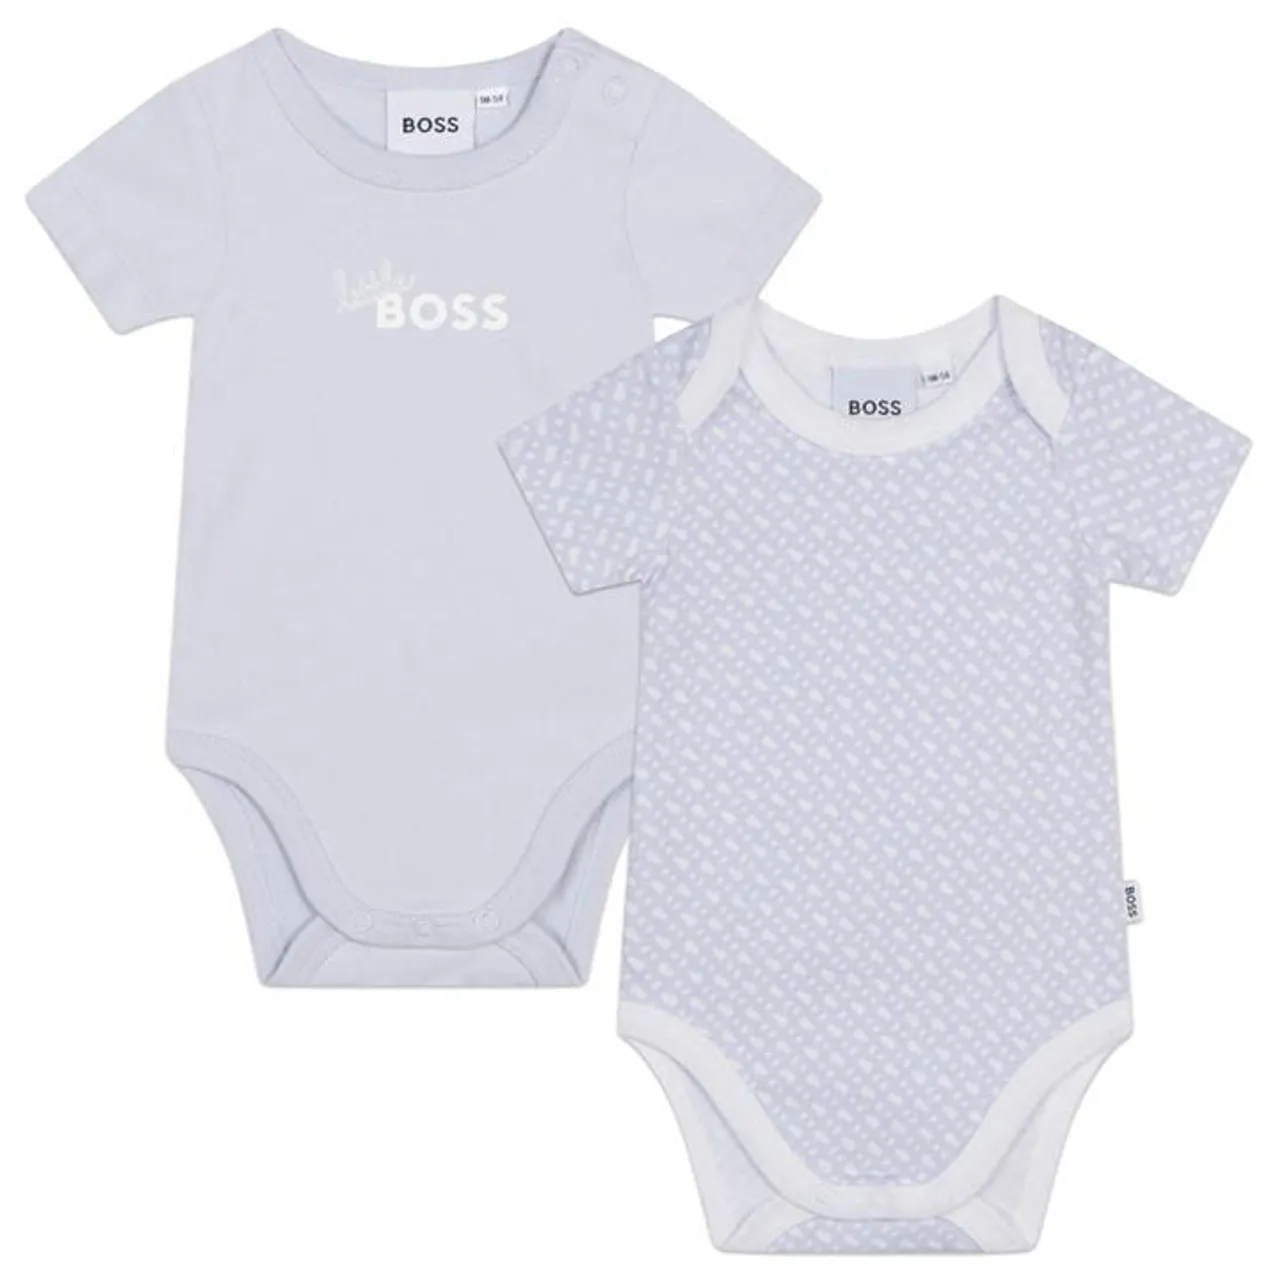 Boss Two Pack Bodysuit Babies - Blue